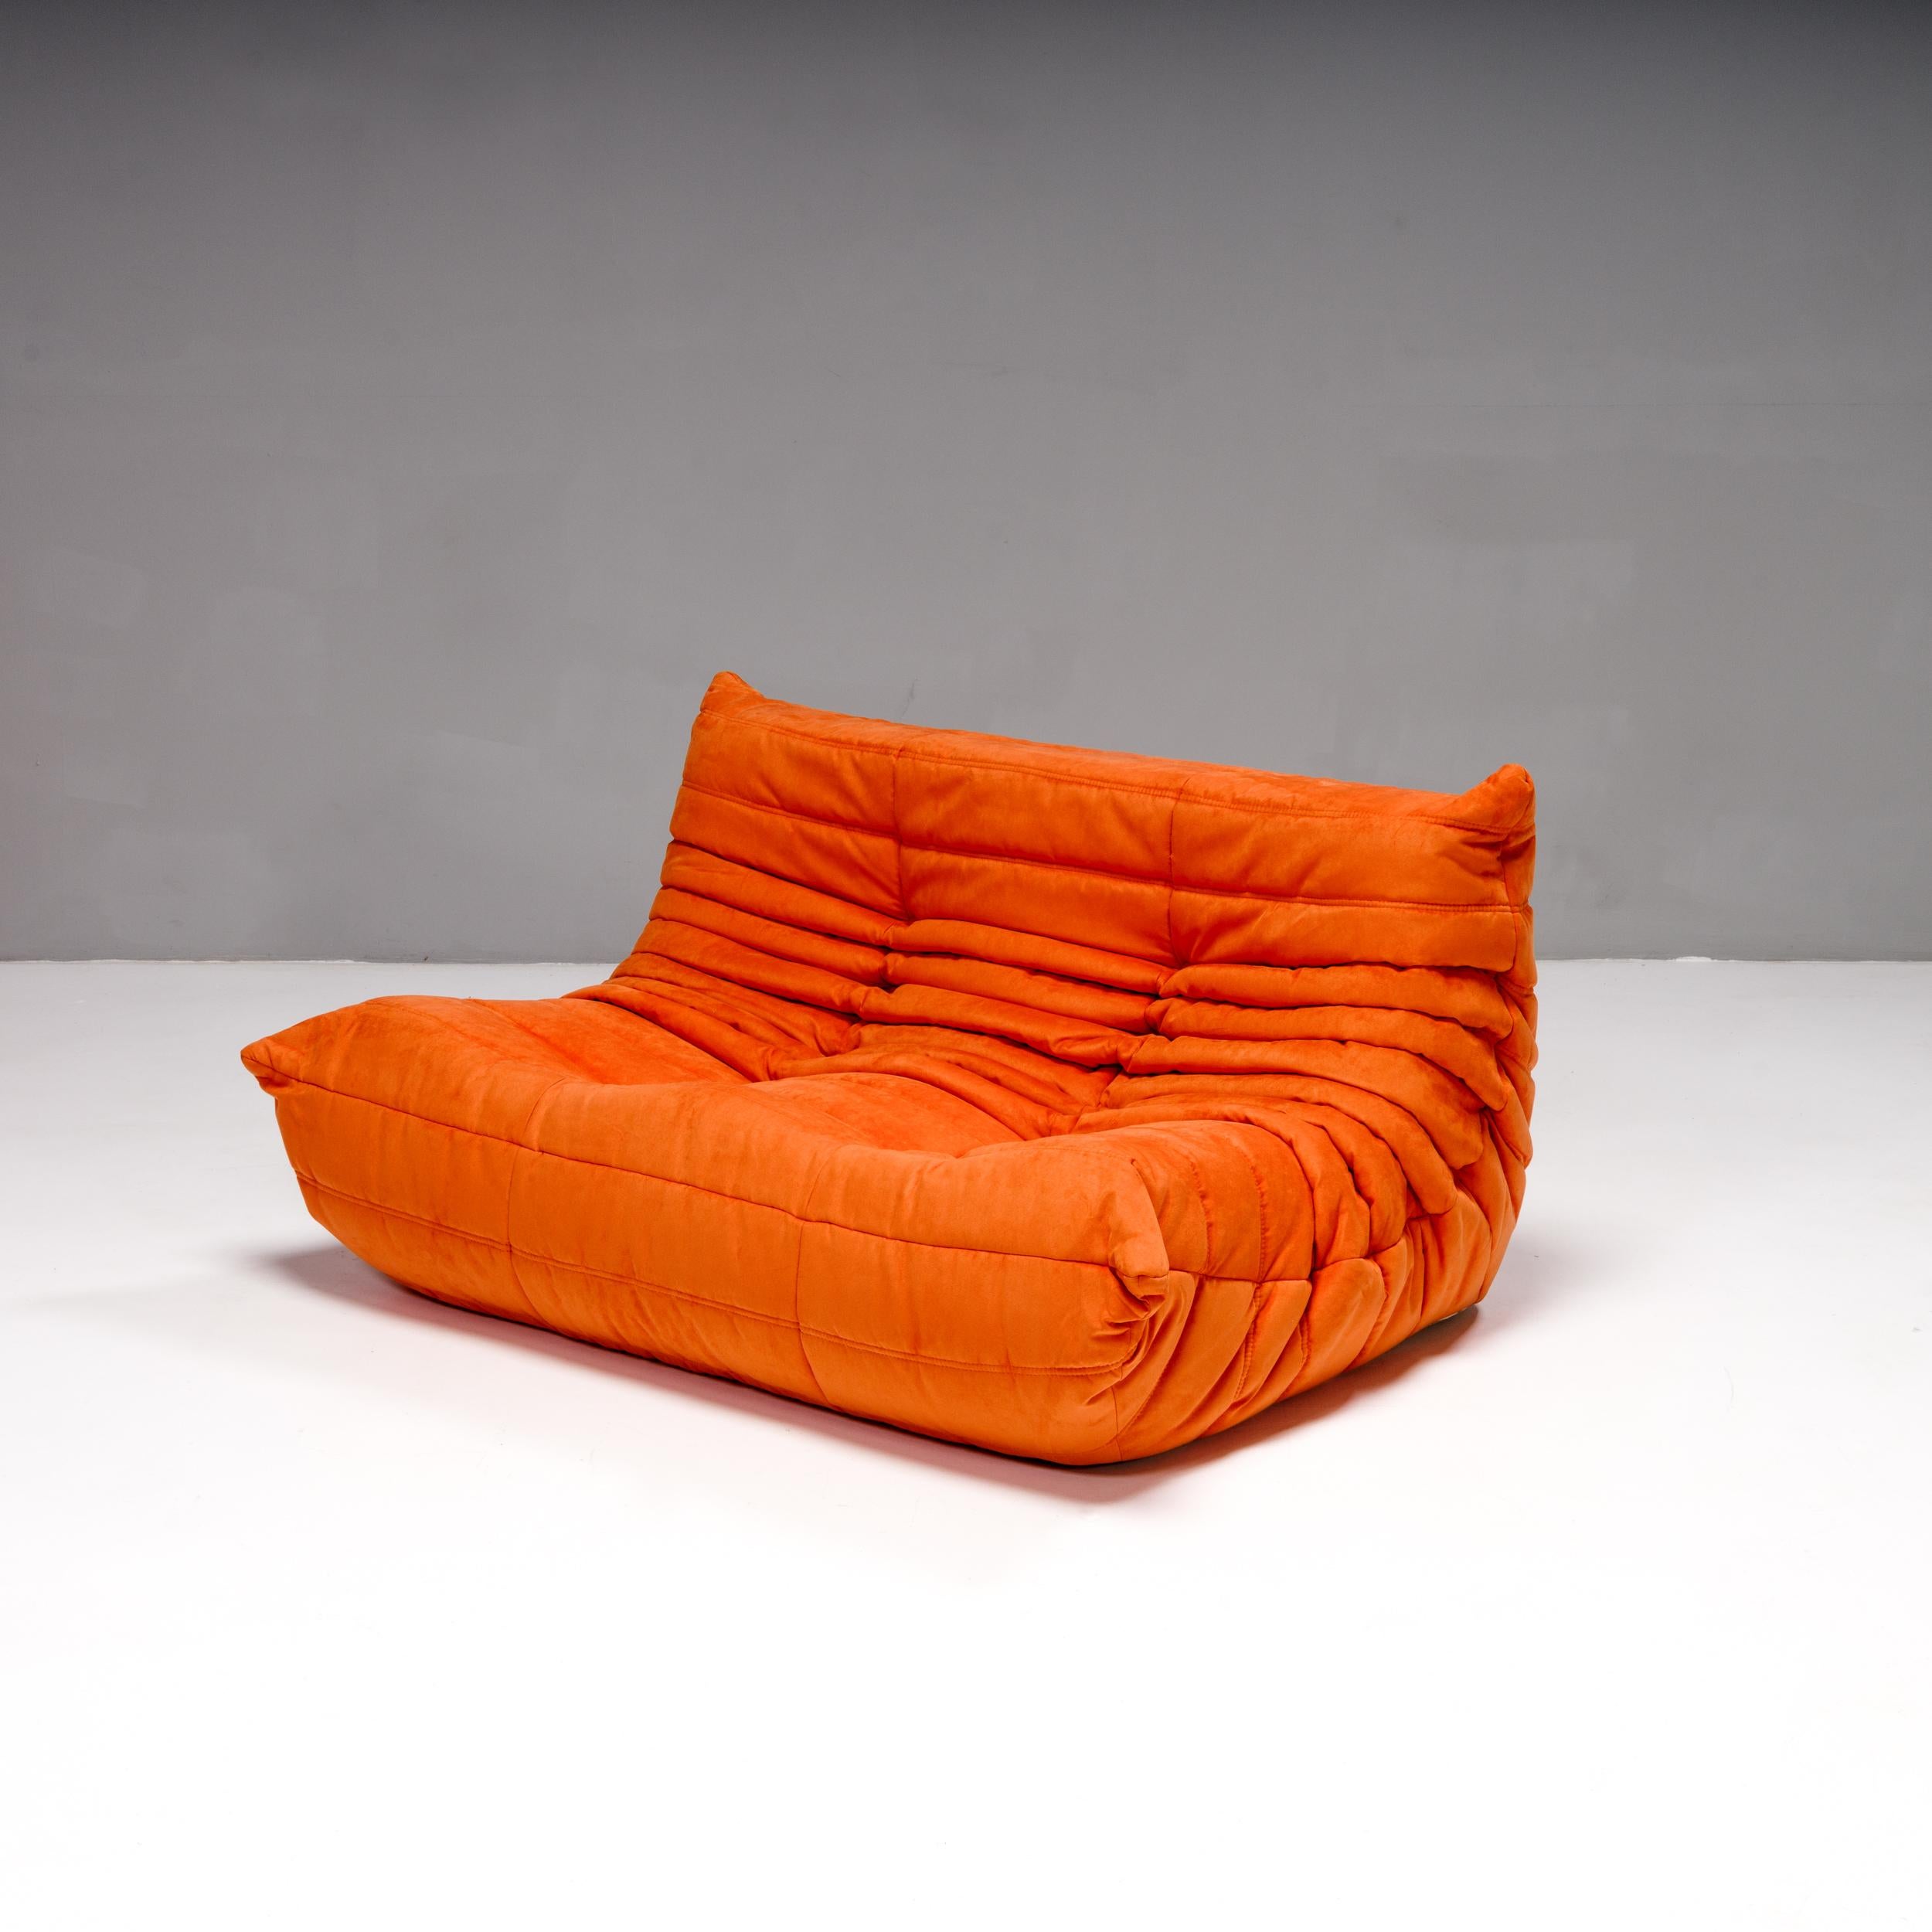 Michel Ducaroy for Ligne Roset Orange Togo Modular Sofas, Set of 5 For Sale 4